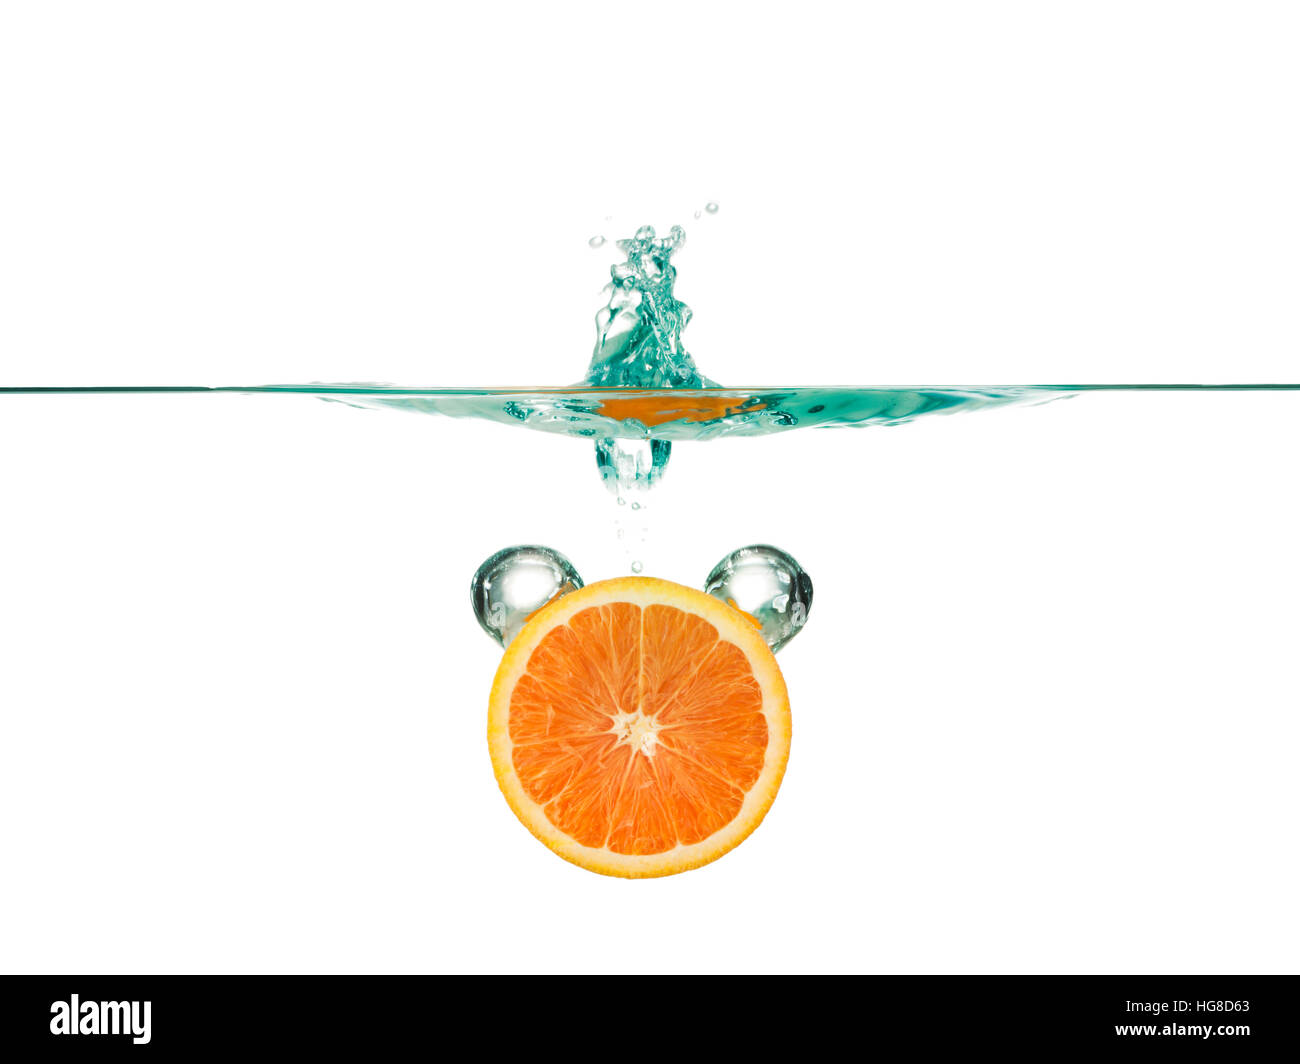 Orange slice in water against white background Stock Photo